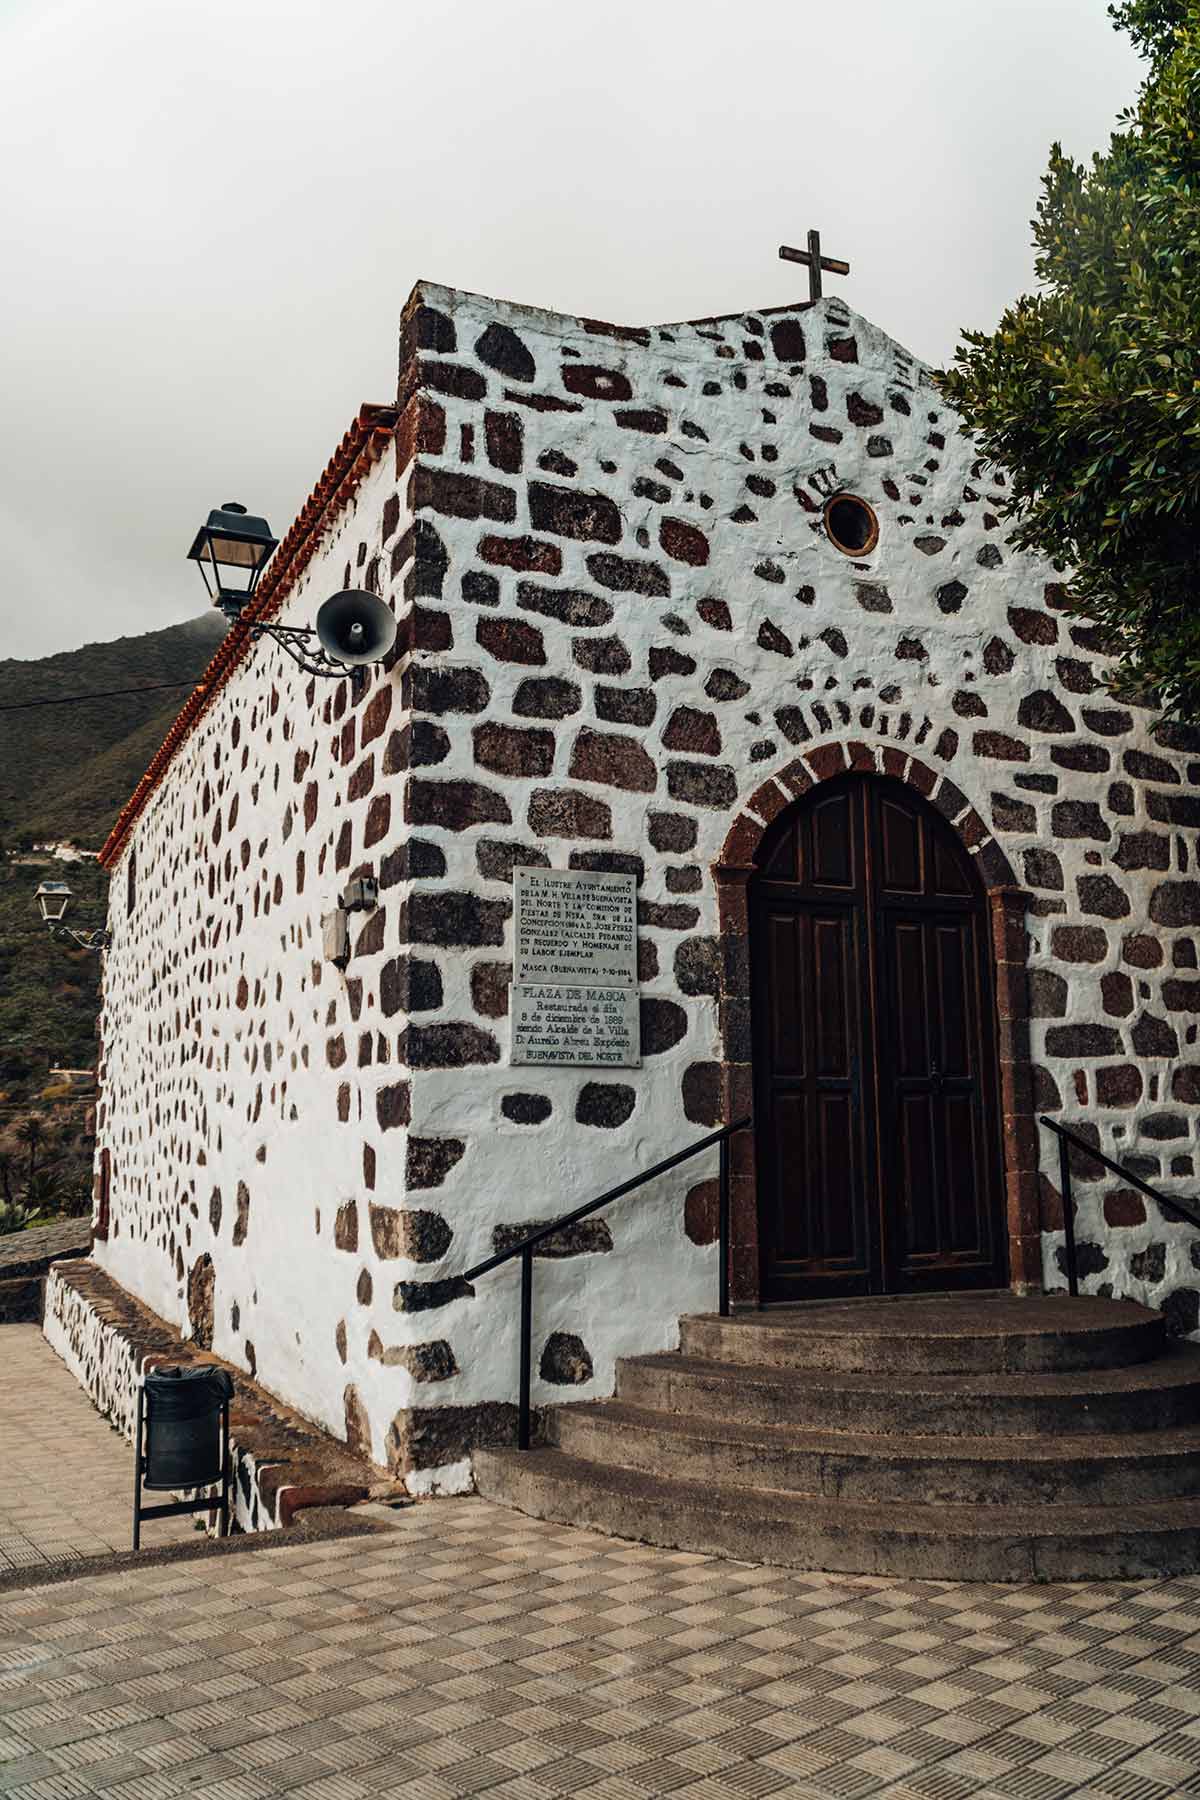 Church in Masca village, Tenerife